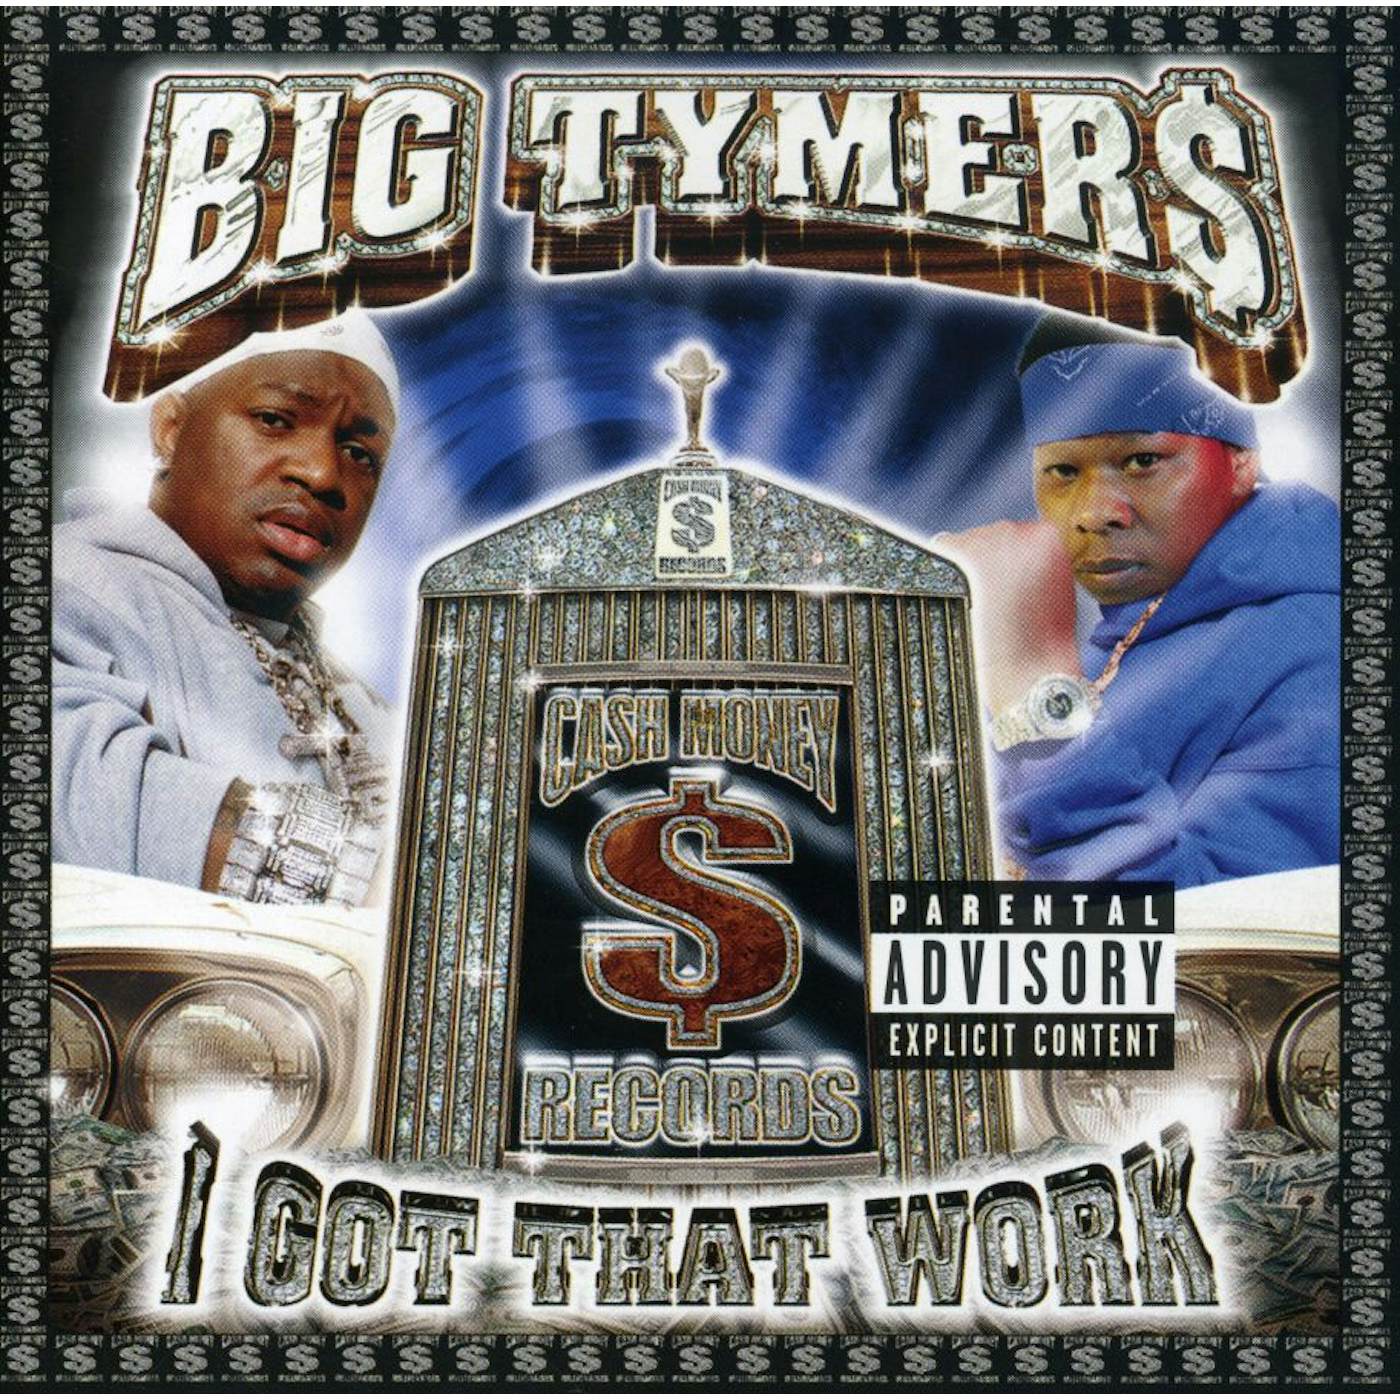 Big Tymers I GOT THAT WORK CD